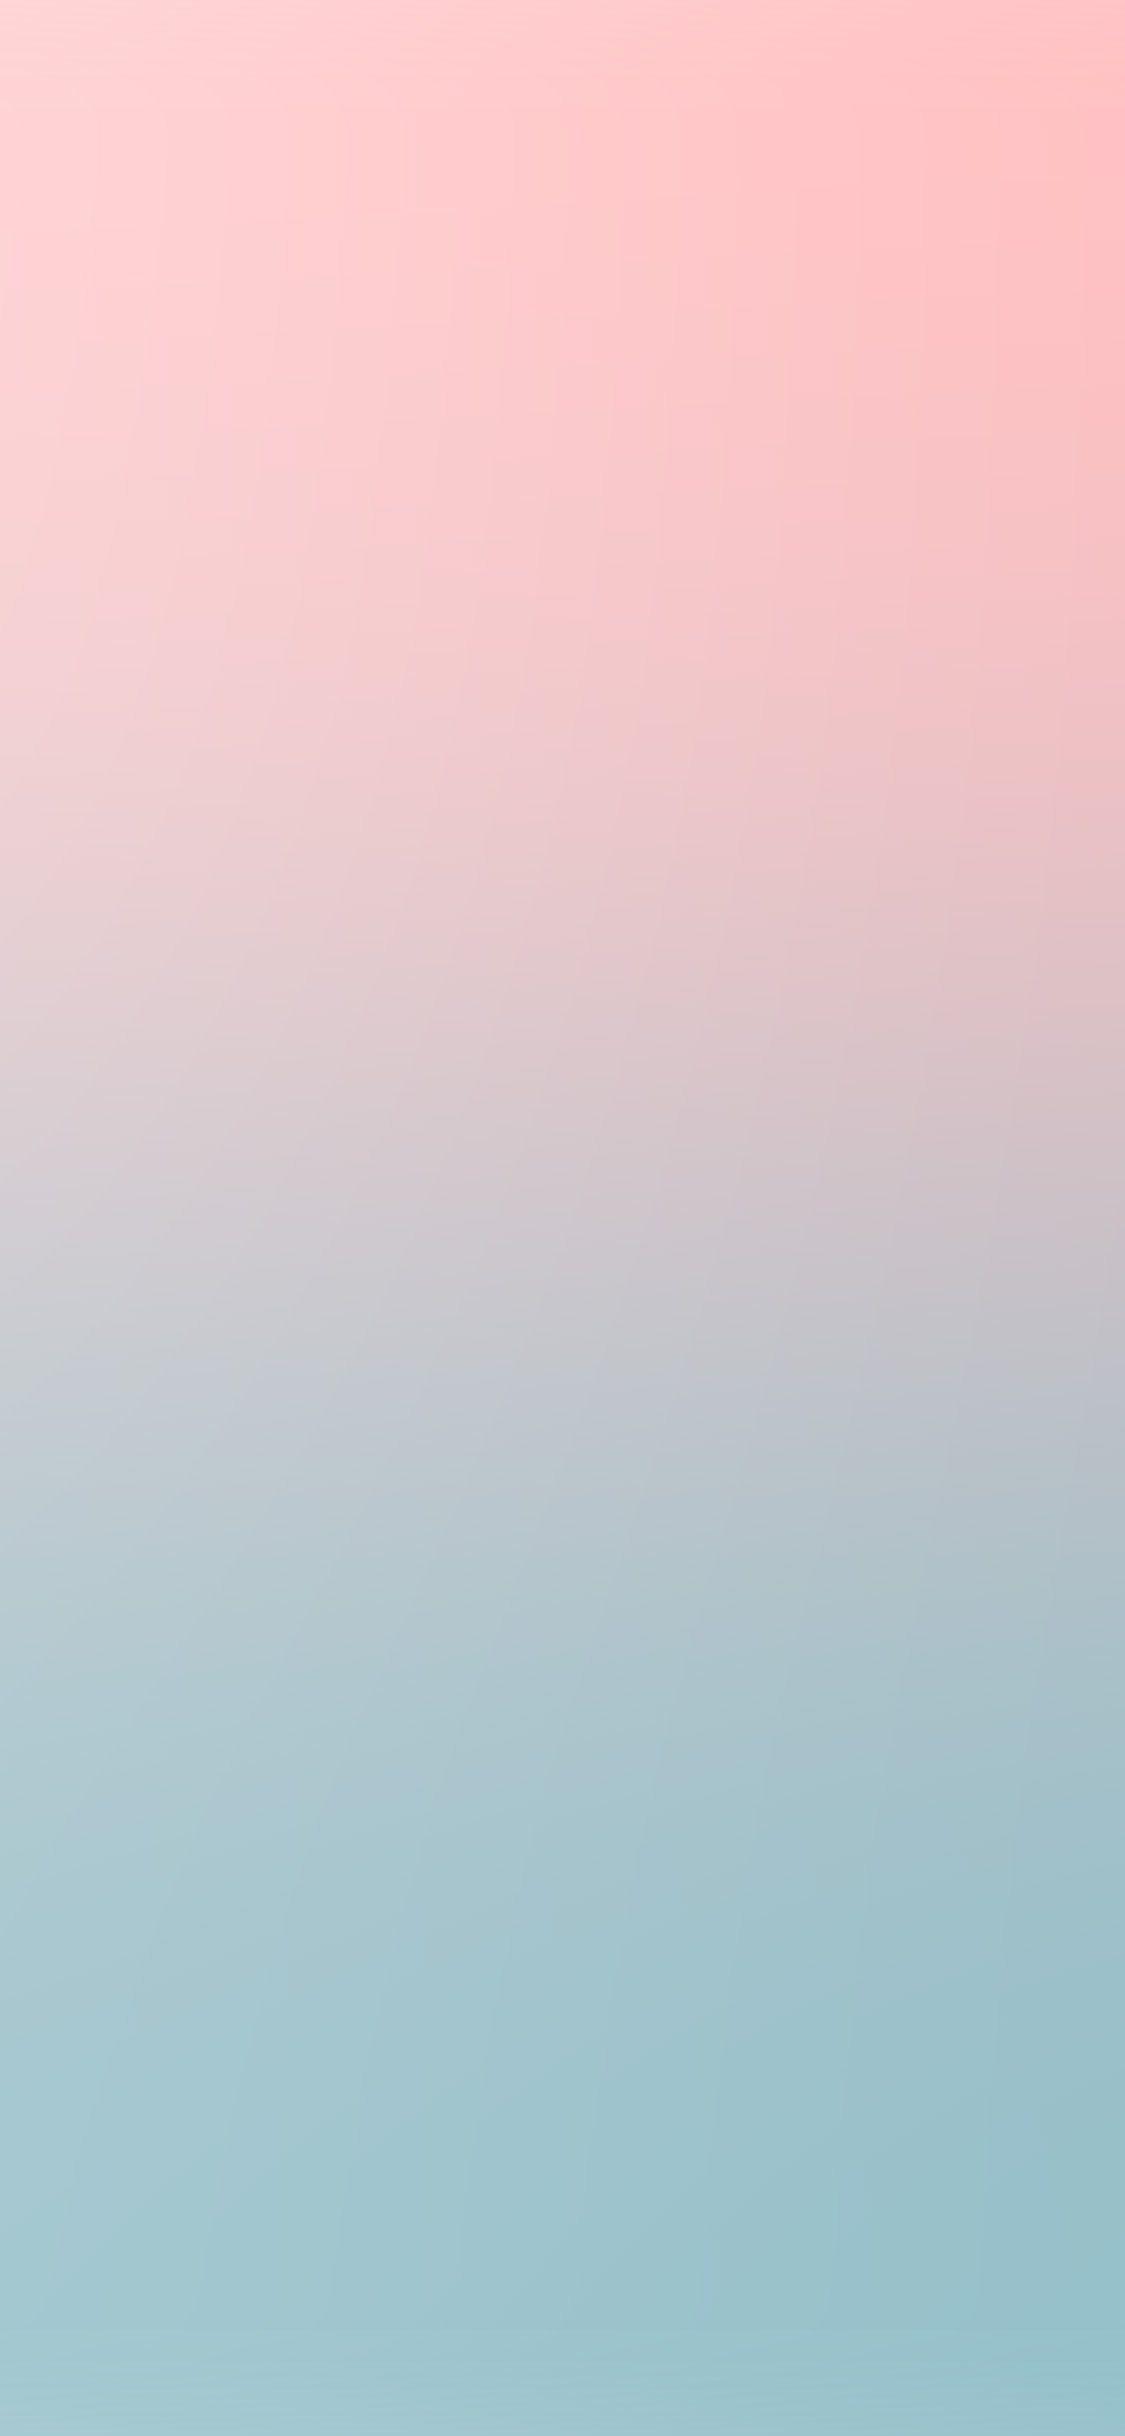 iPhone X wallpaper. pink blue soft pastel blur gradation